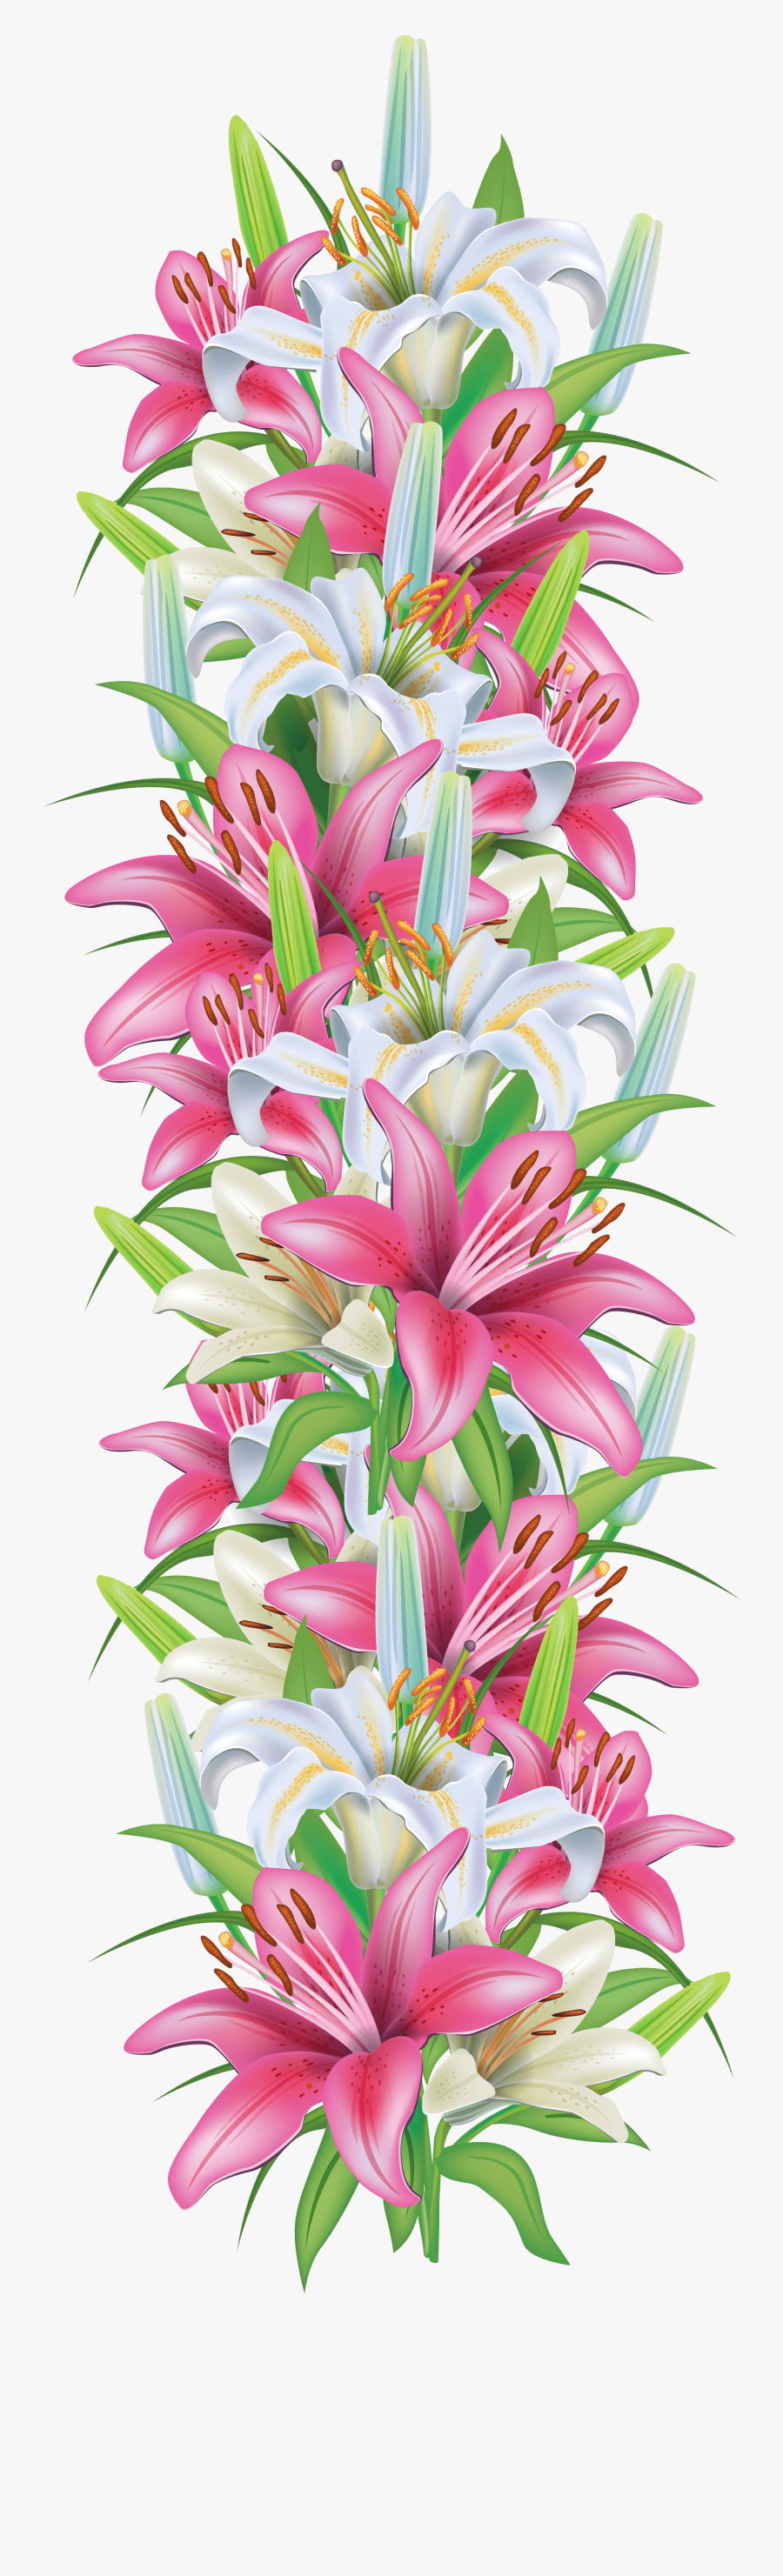 Pink And White Lilies Decoration Border Png Clipart - Floral Decorative Border Png, Transparent Clipart